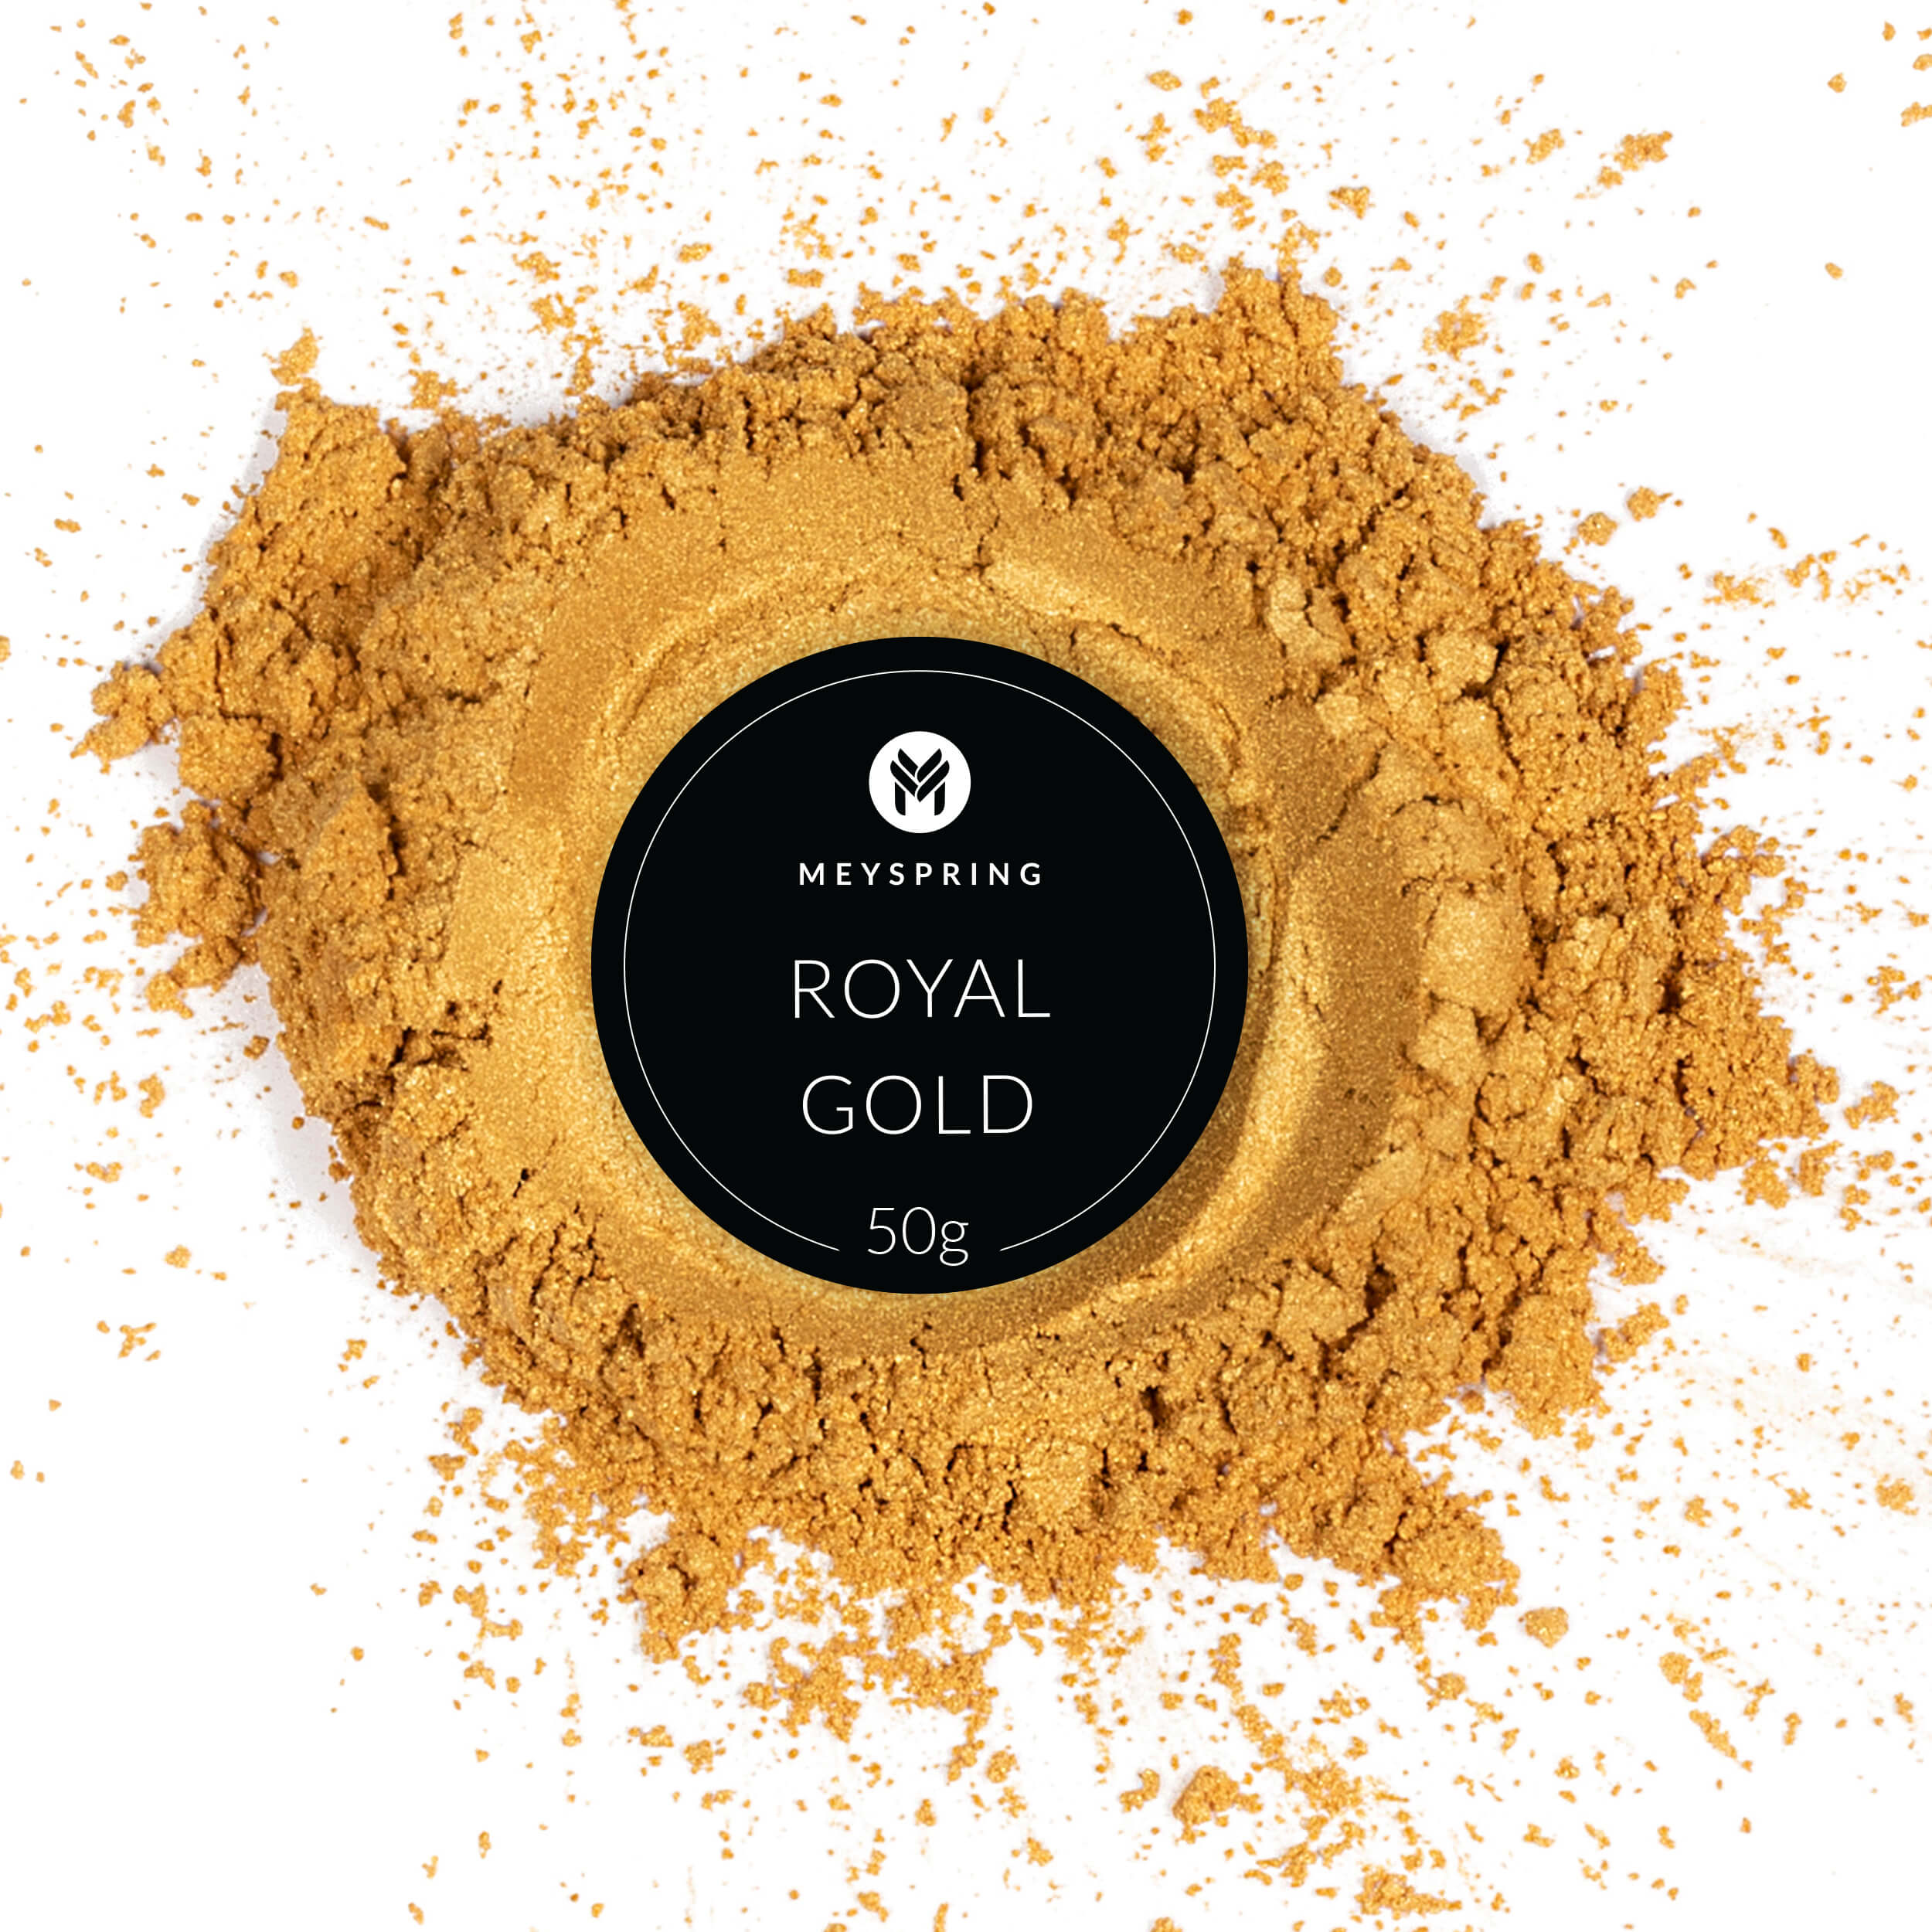 Gilded Gold | True Metallic Gold Powder | MEYSPRING